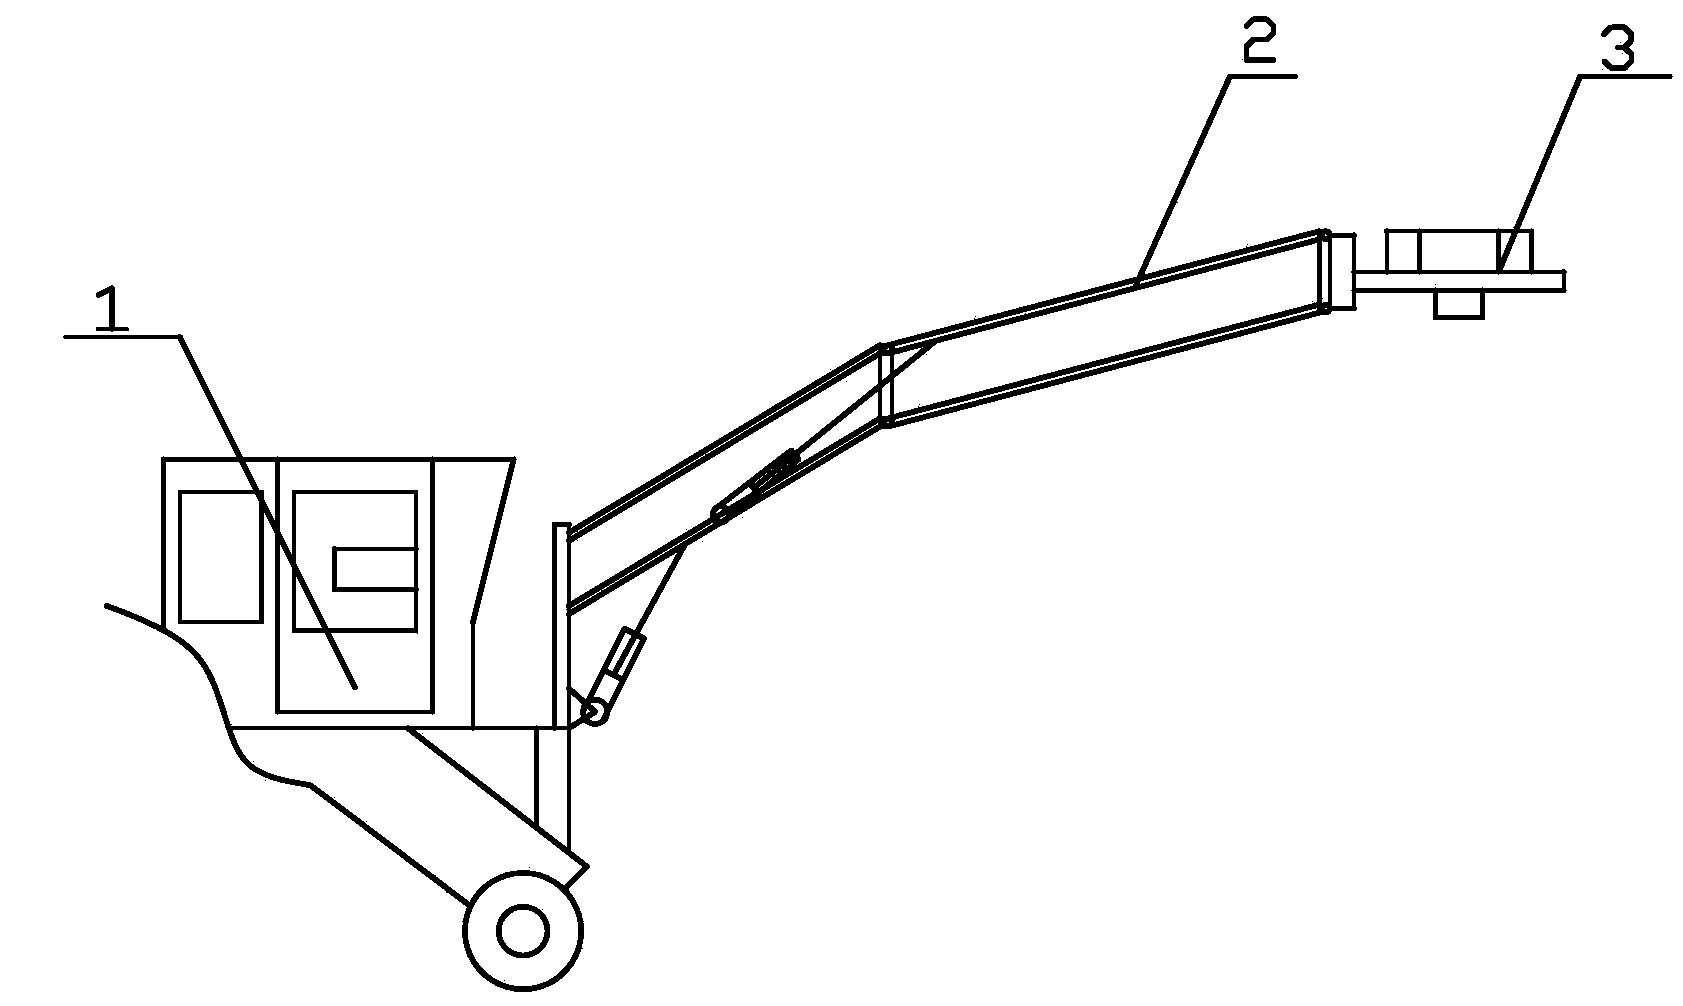 Tip cutting device of sugarcane harvesting machine